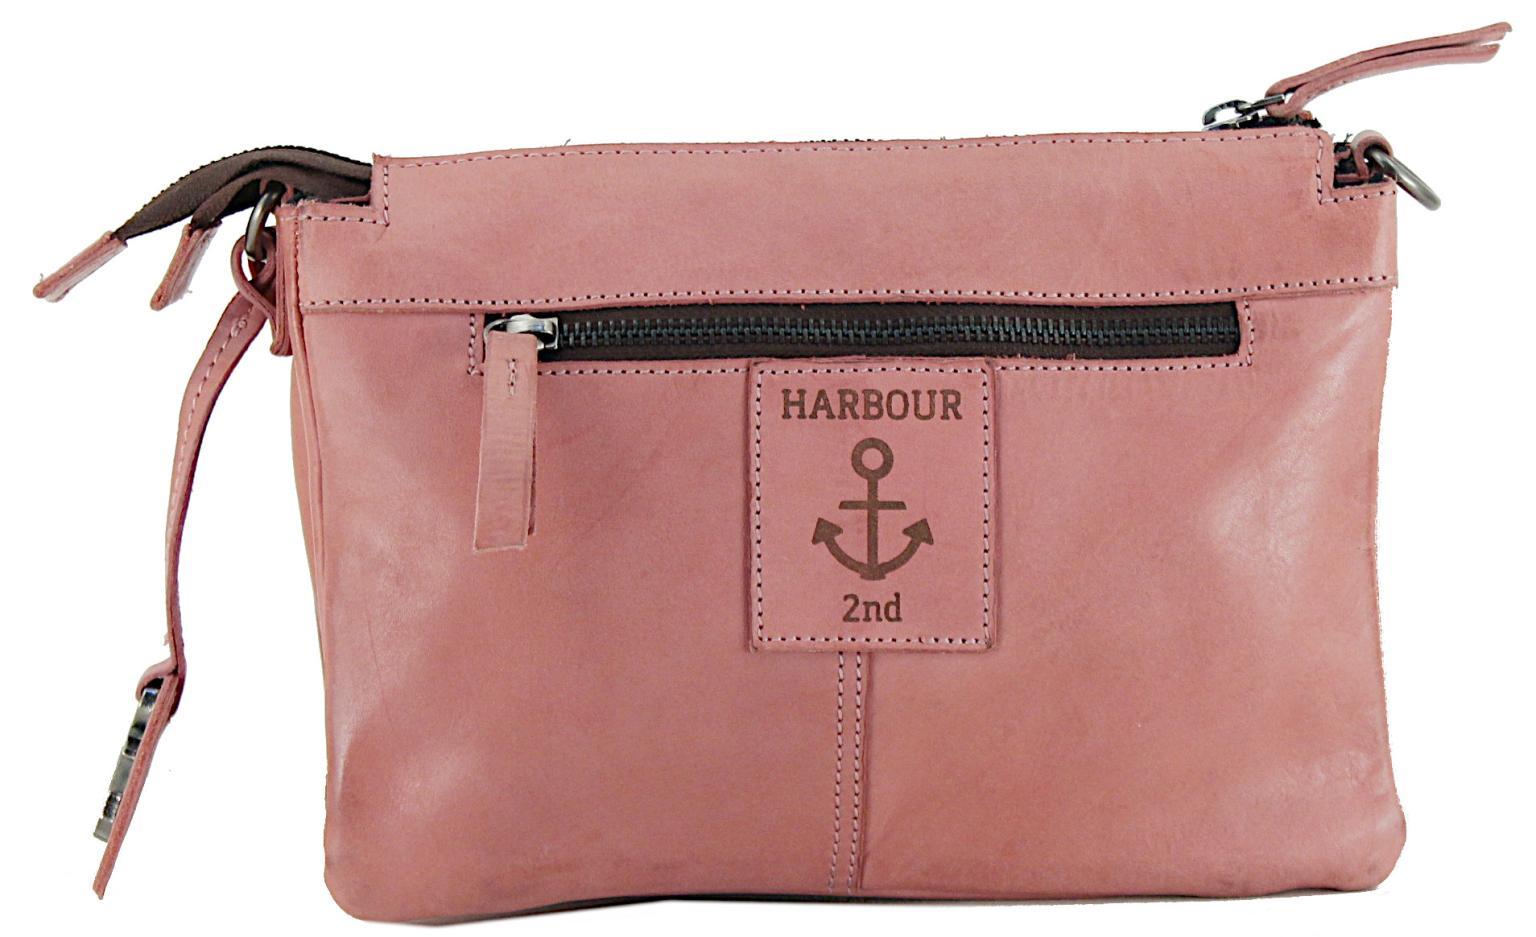 Used Look Handtasche Flamingo Leder Harbour 2nd Flamingo Rosa Flechtdesign